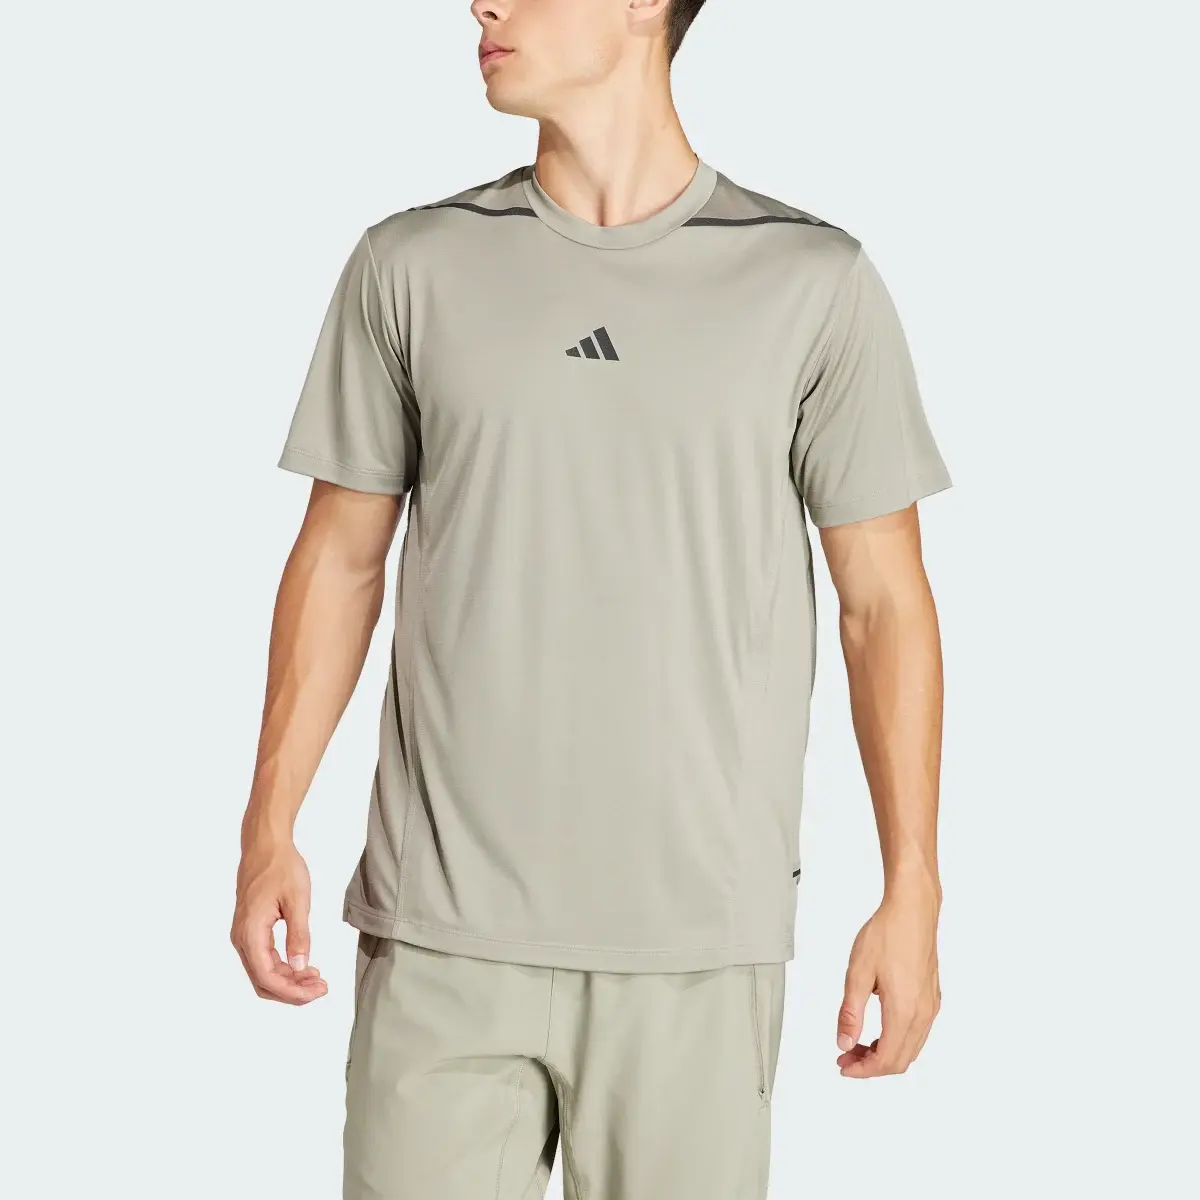 Adidas T-shirt d'entraînement Designed for Training Adistrong. 1